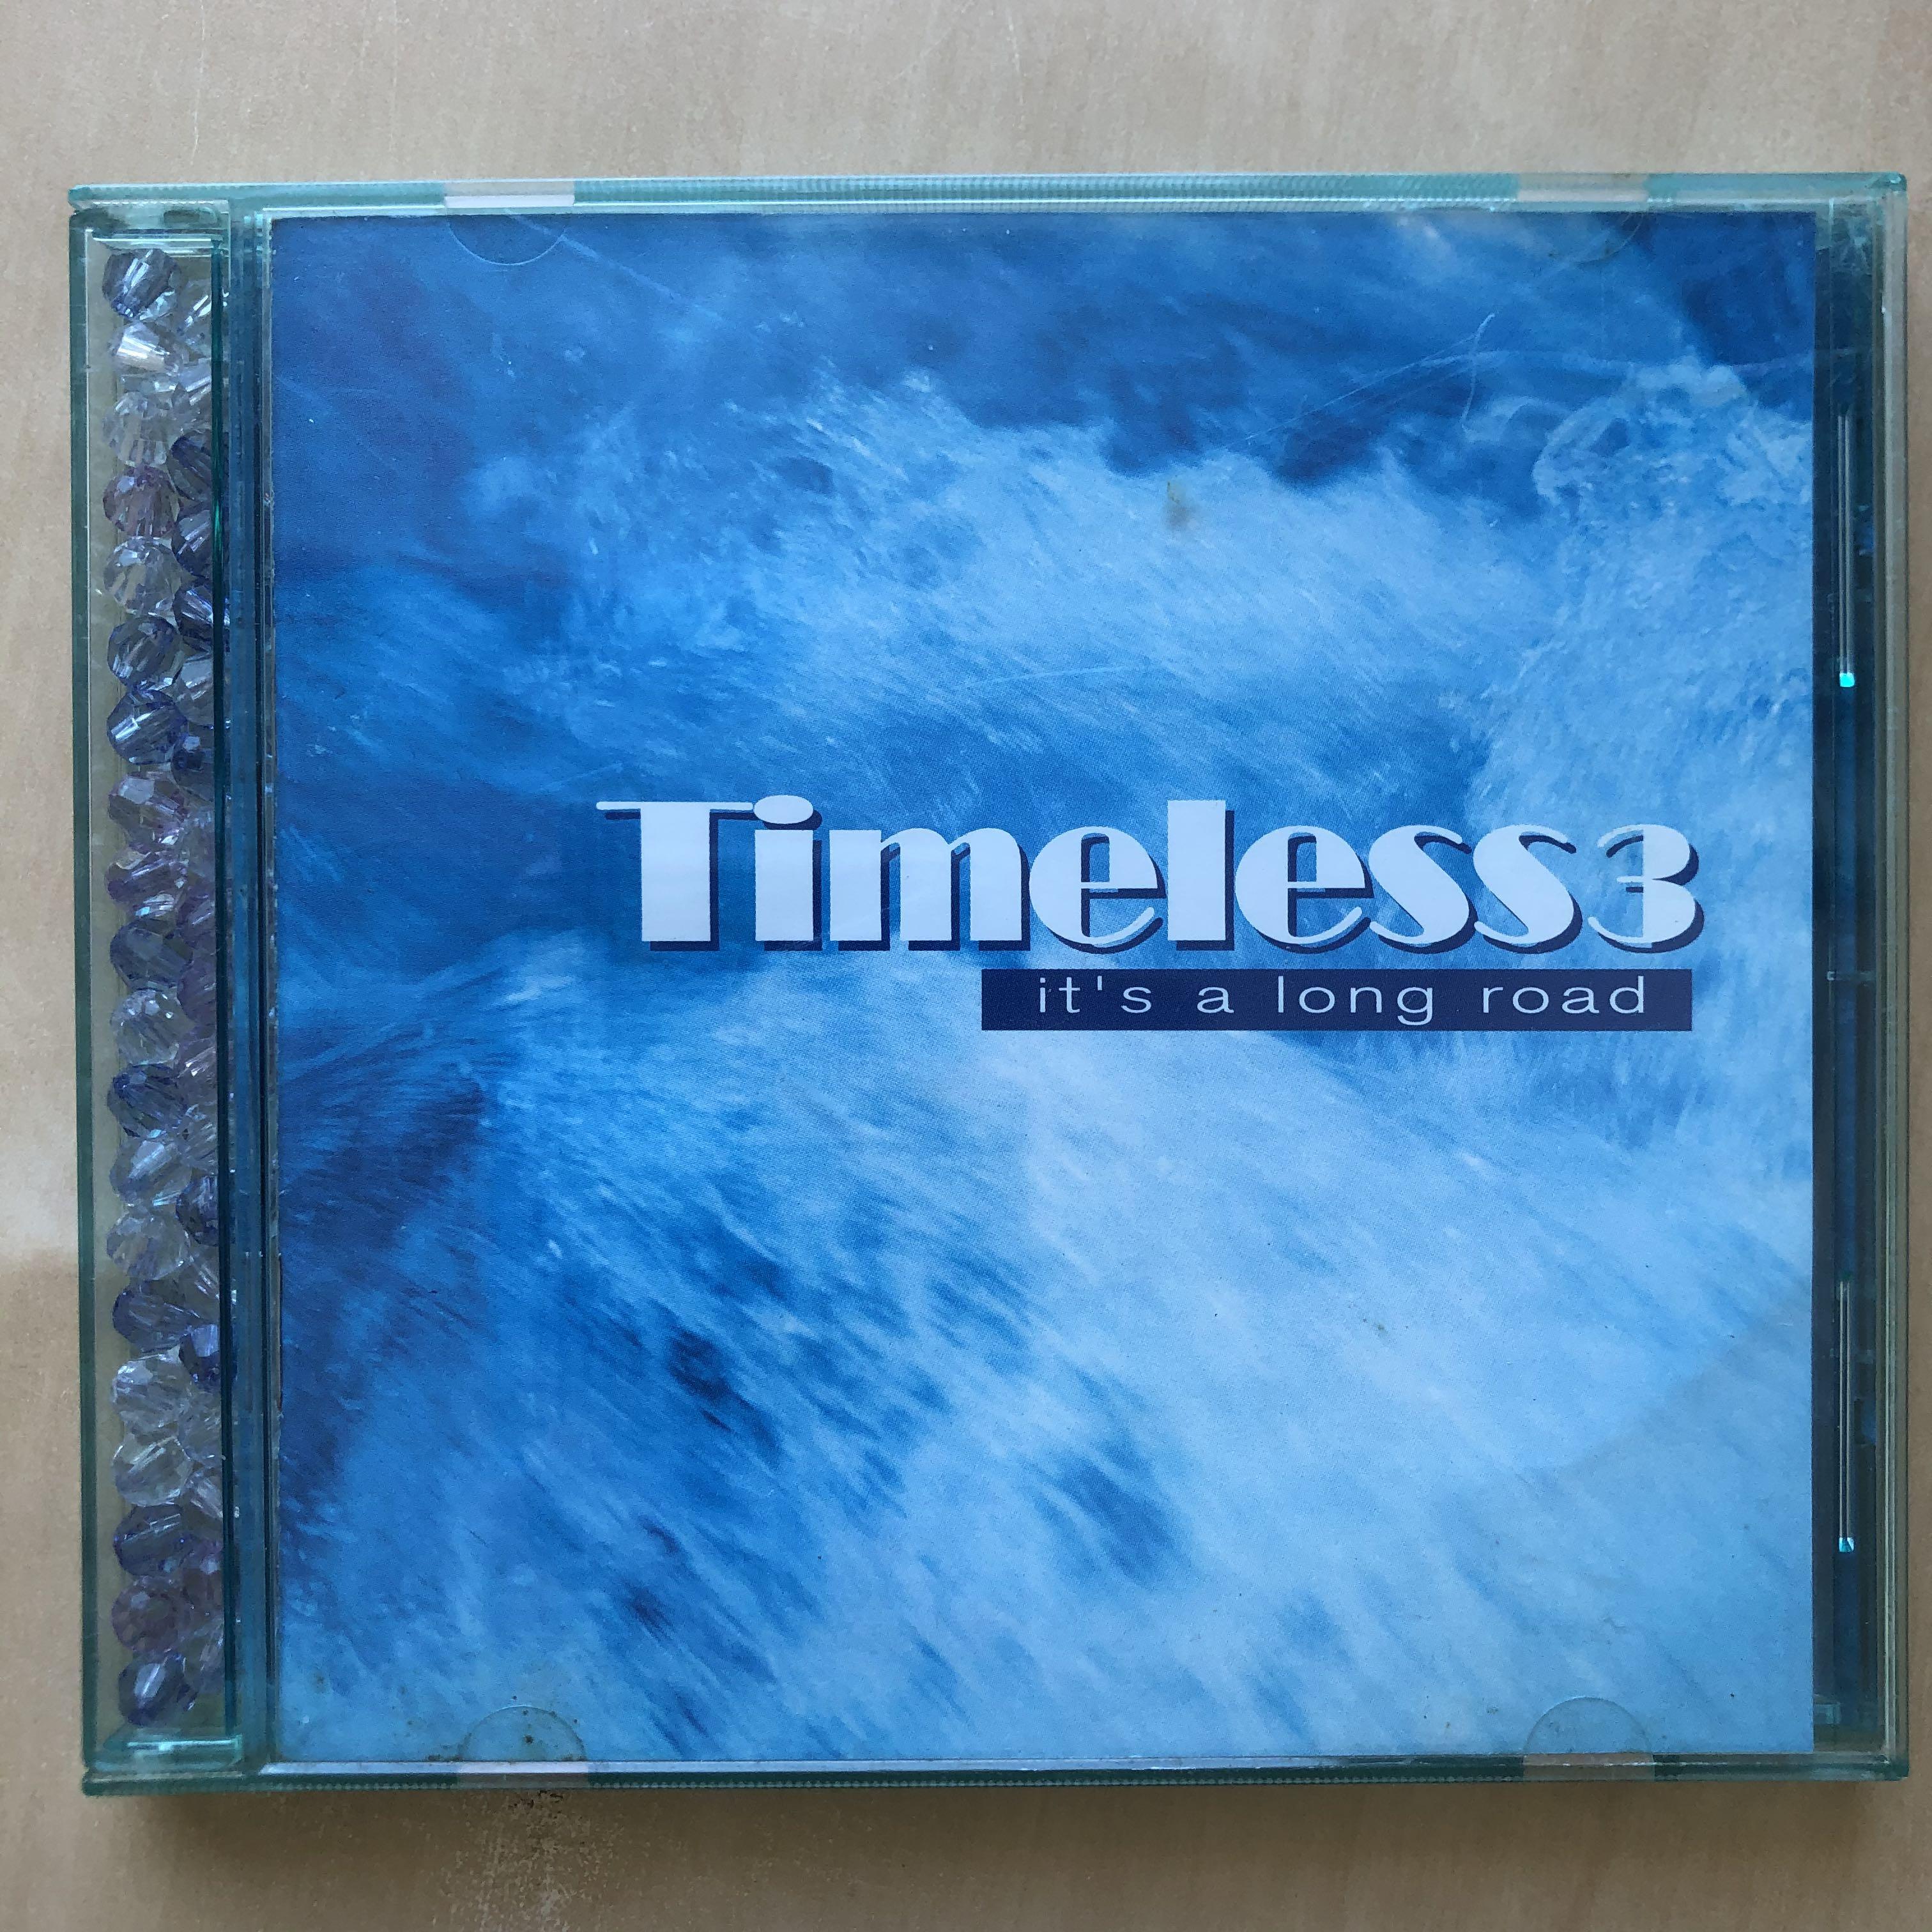 CD丨Timeless 3 It's a long road 英語歌曲精選, 興趣及遊戲, 音樂